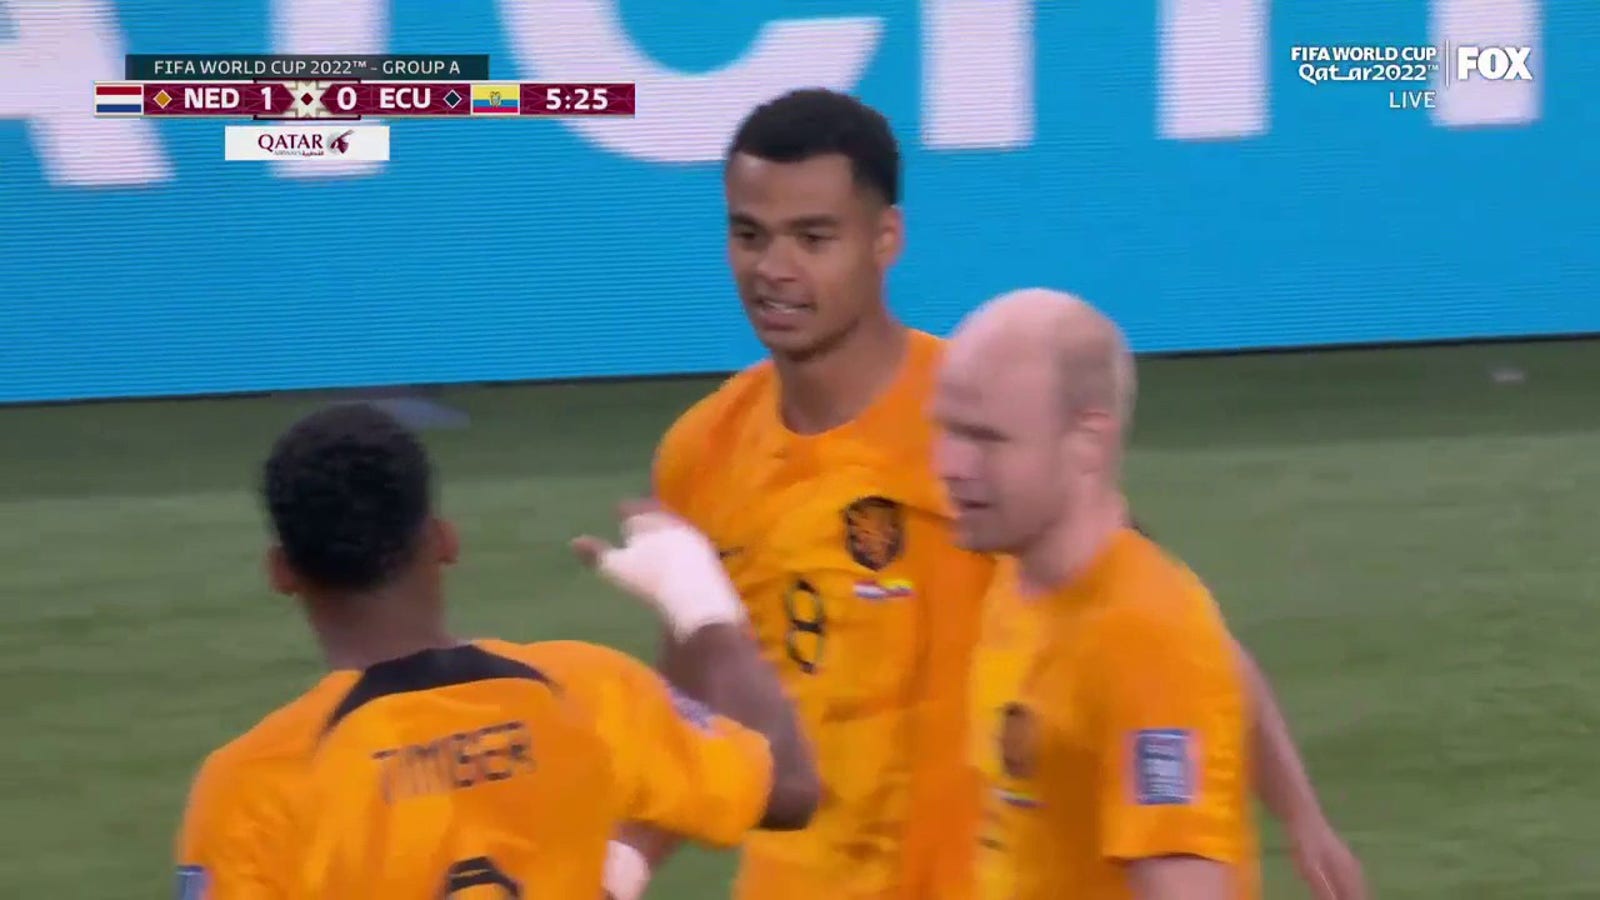 Netherlands' Cody Gakpo scores goal vs. Ecuador in 6'